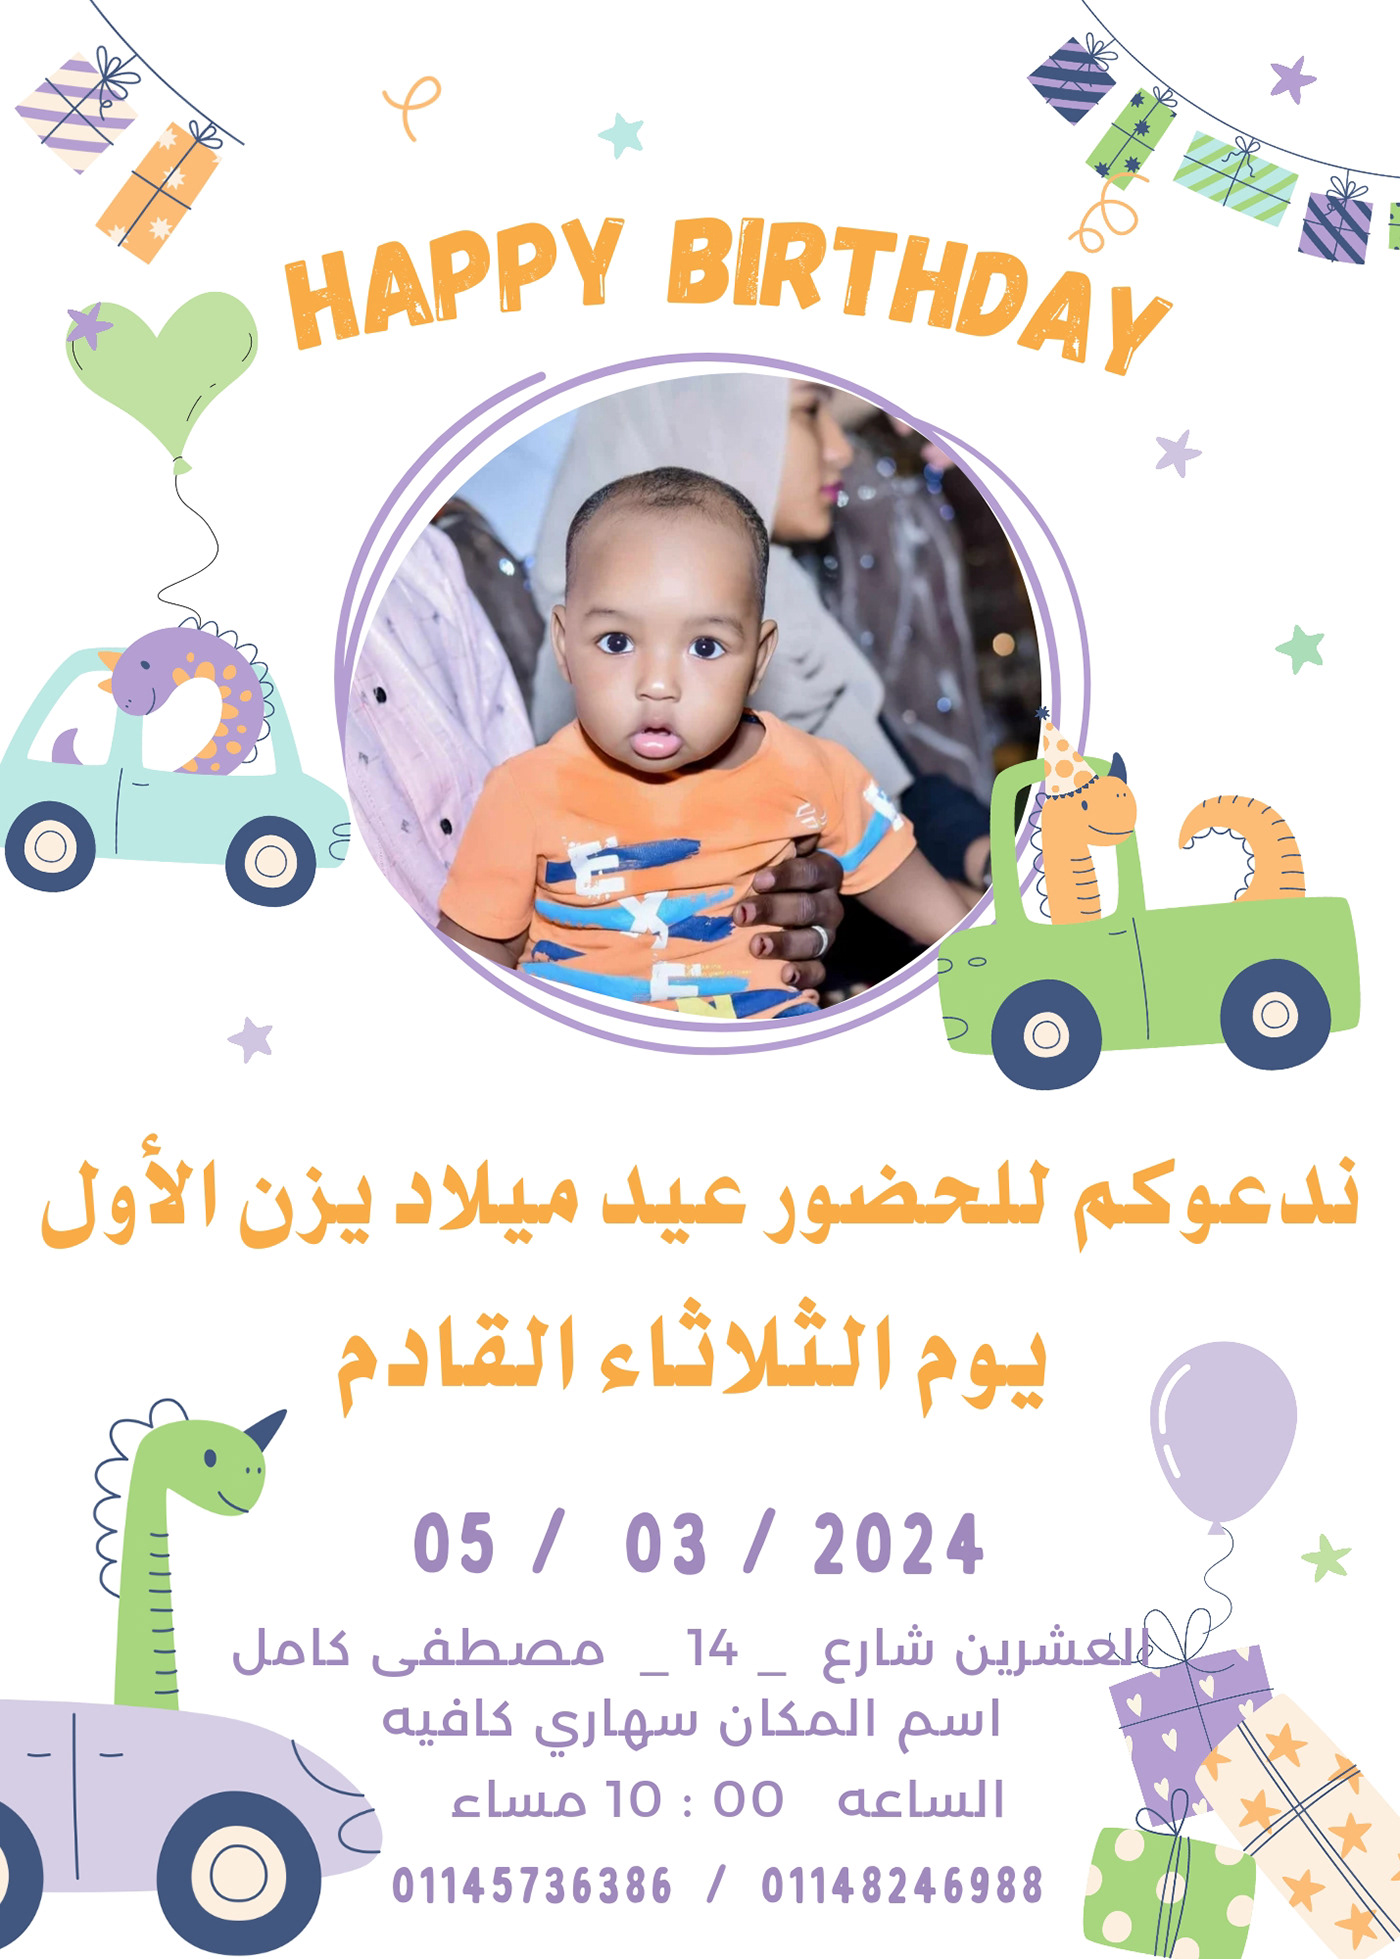 Birthday Invitation happy birthday graphic design  Social media post HappyBirthday celebration party birthday party card